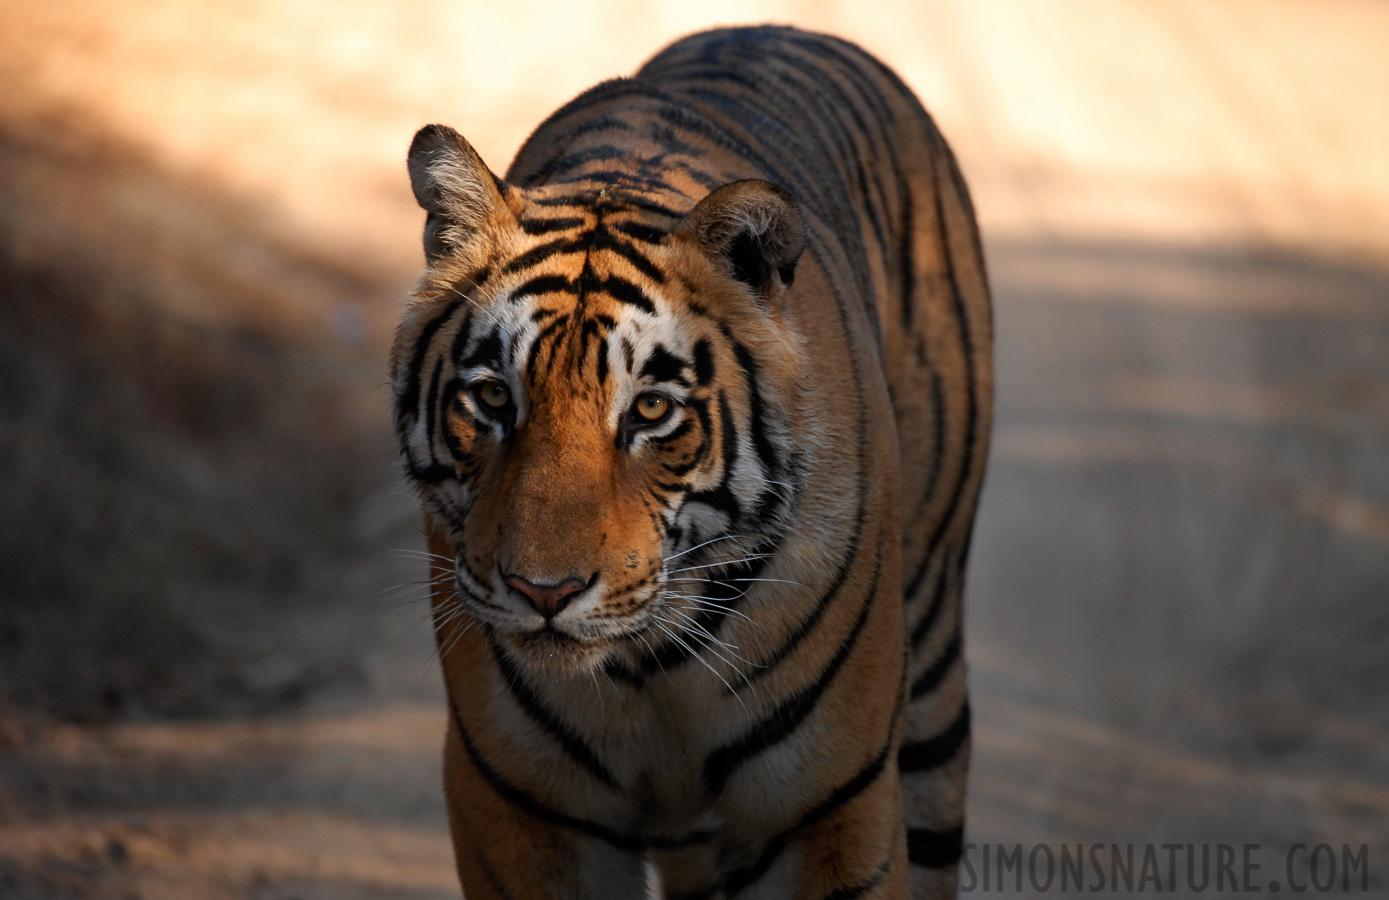 Panthera tigris tigris [400 mm, 1/250 sec at f / 4.0, ISO 400]